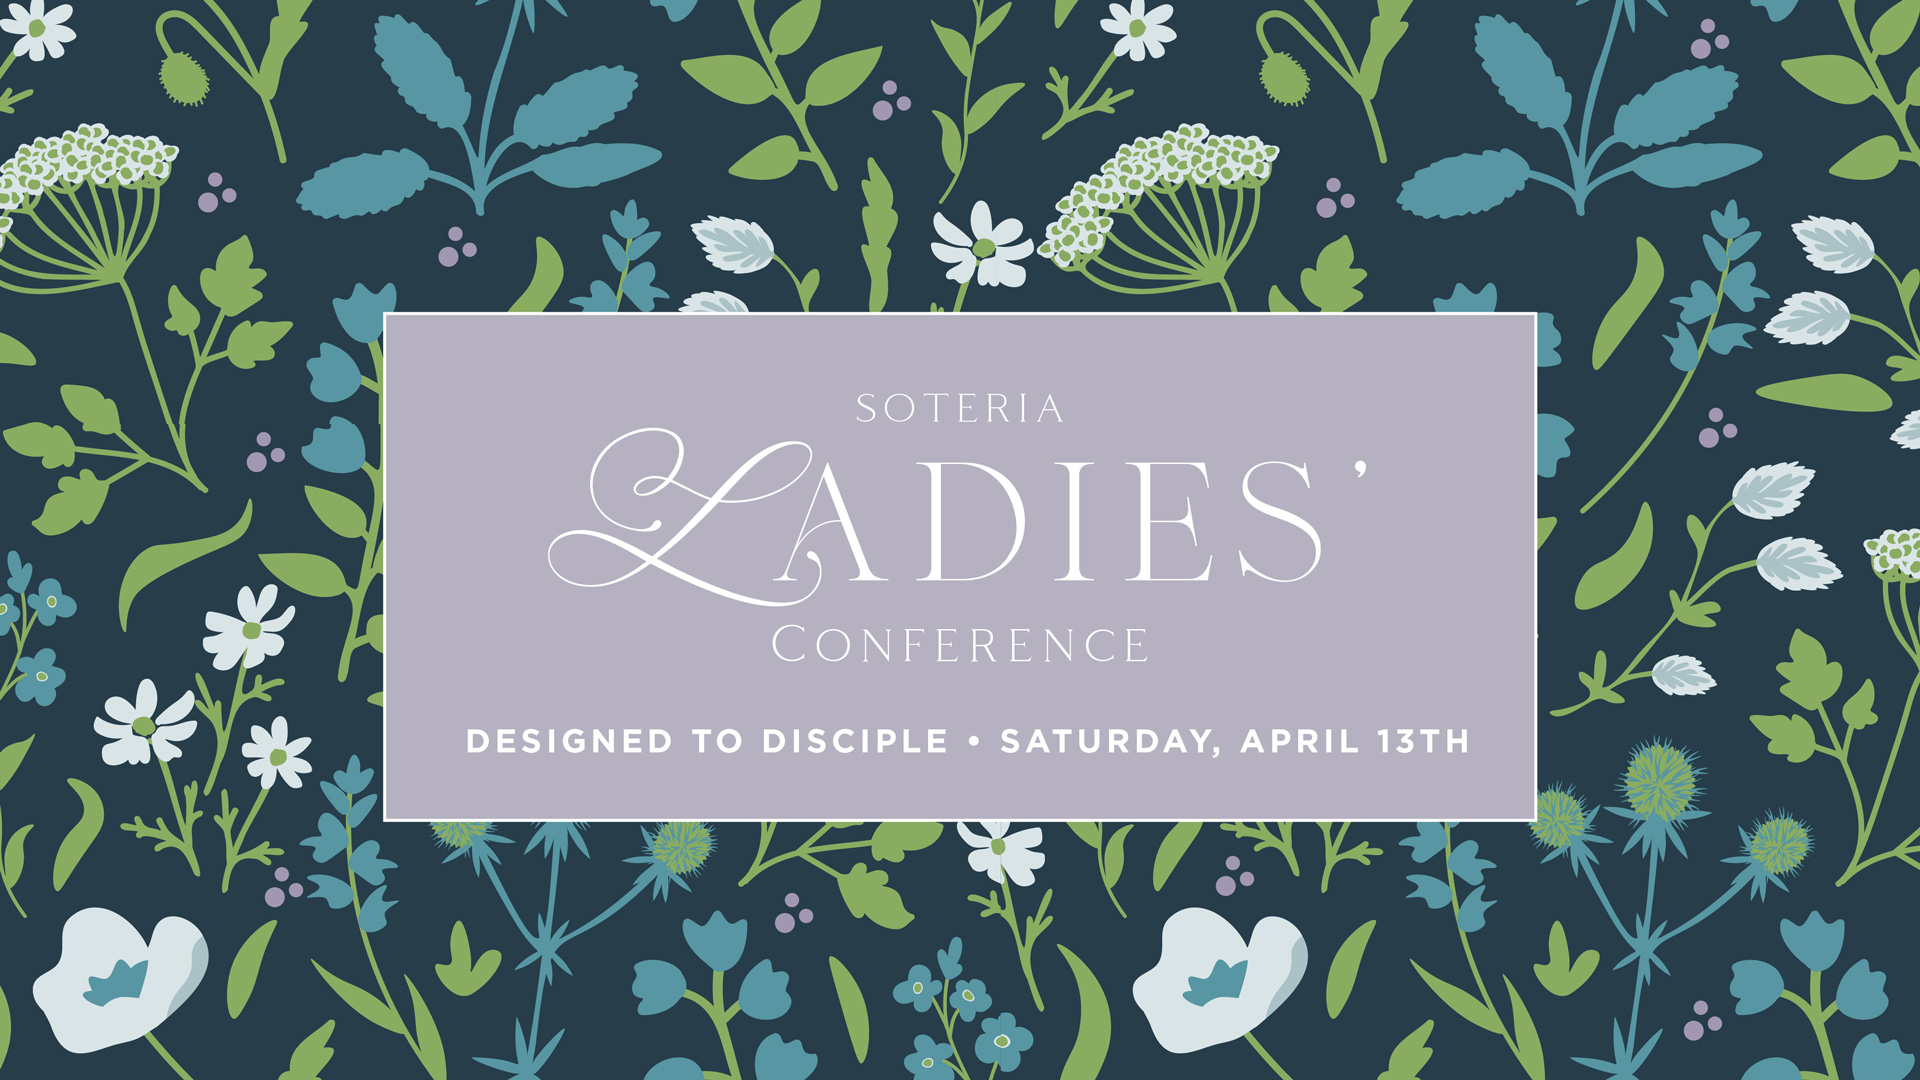 Soteria Ladies’ Conference